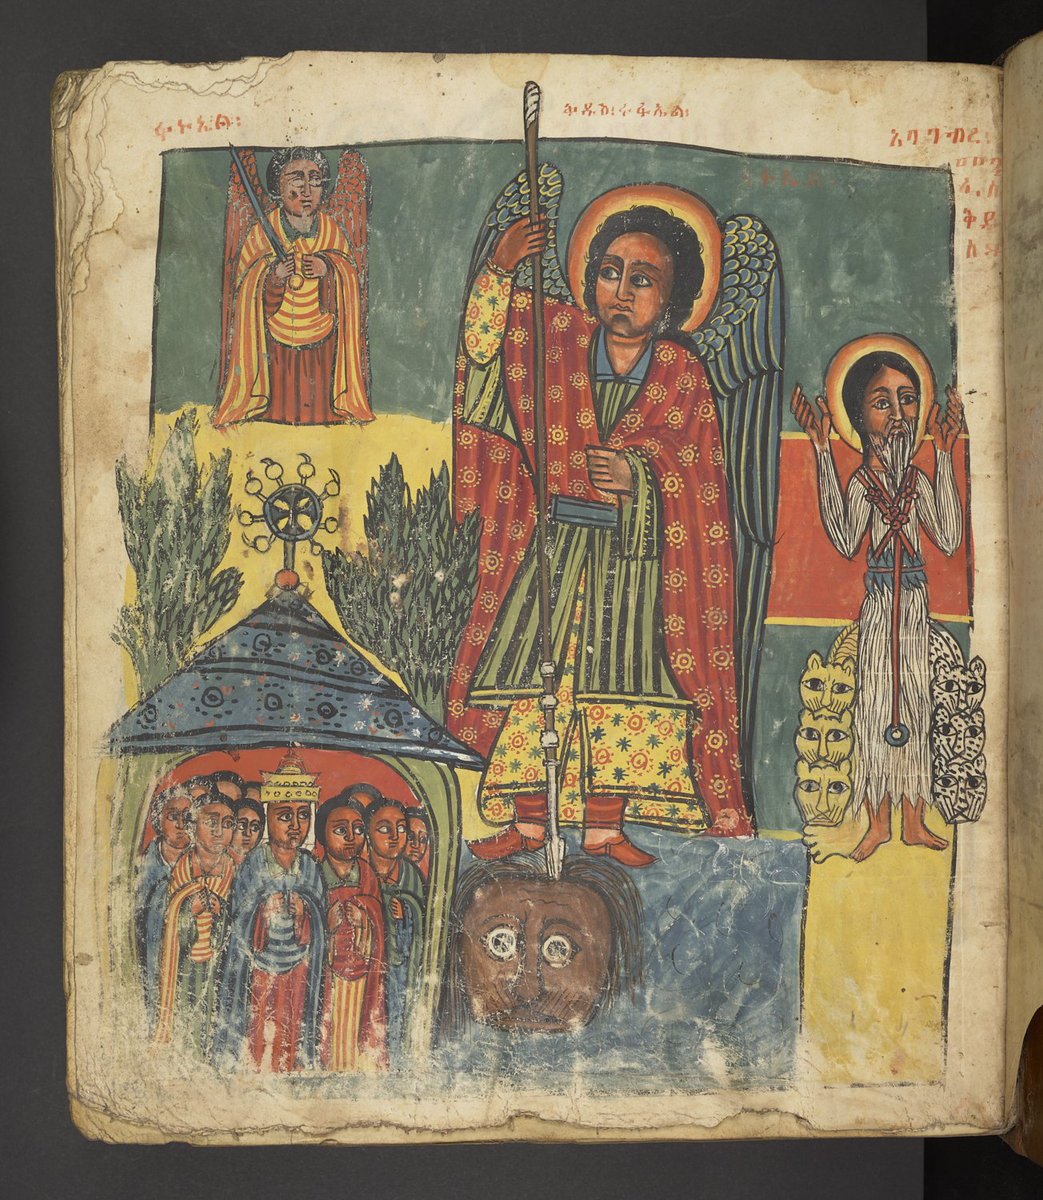 The Kebra Nagast (Ethiopia, c. 1300s)